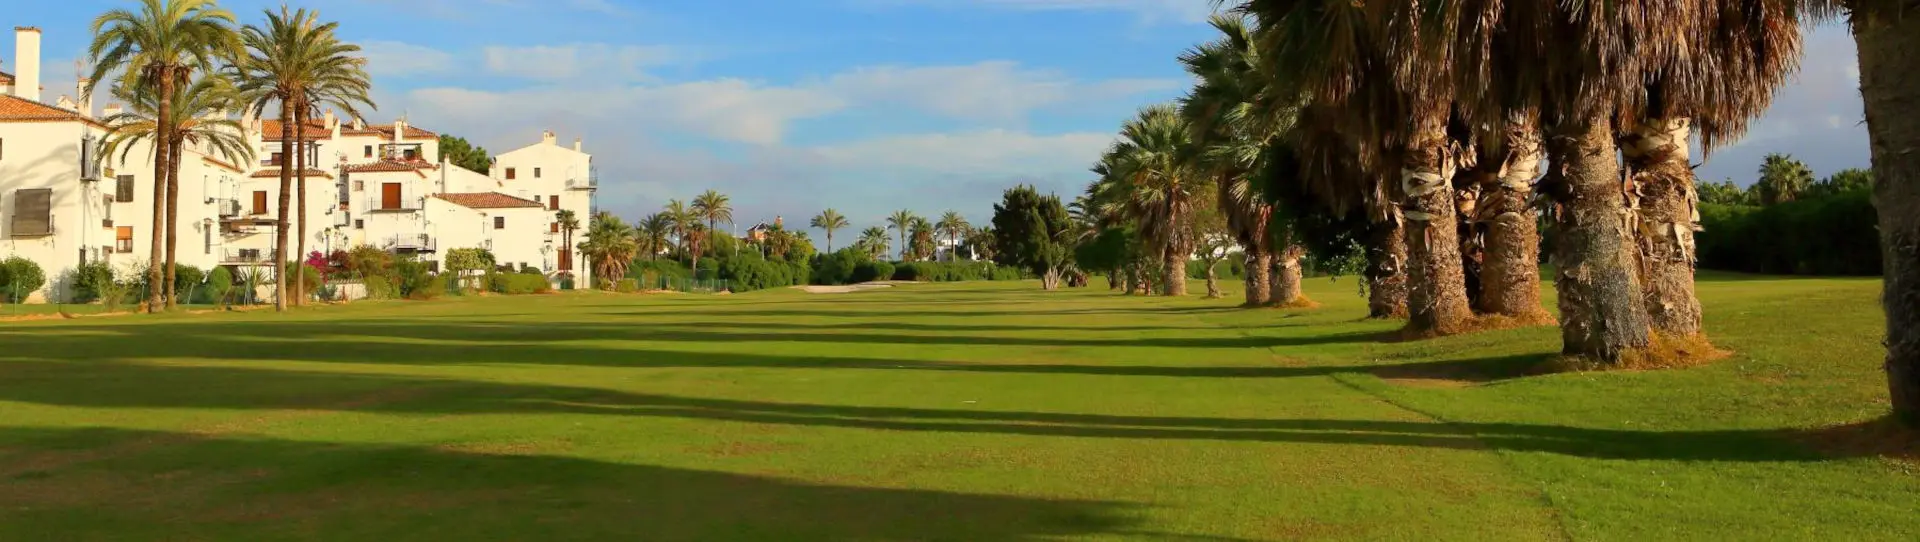 Spain golf holidays - Malaga Duo Golf - Photo 1